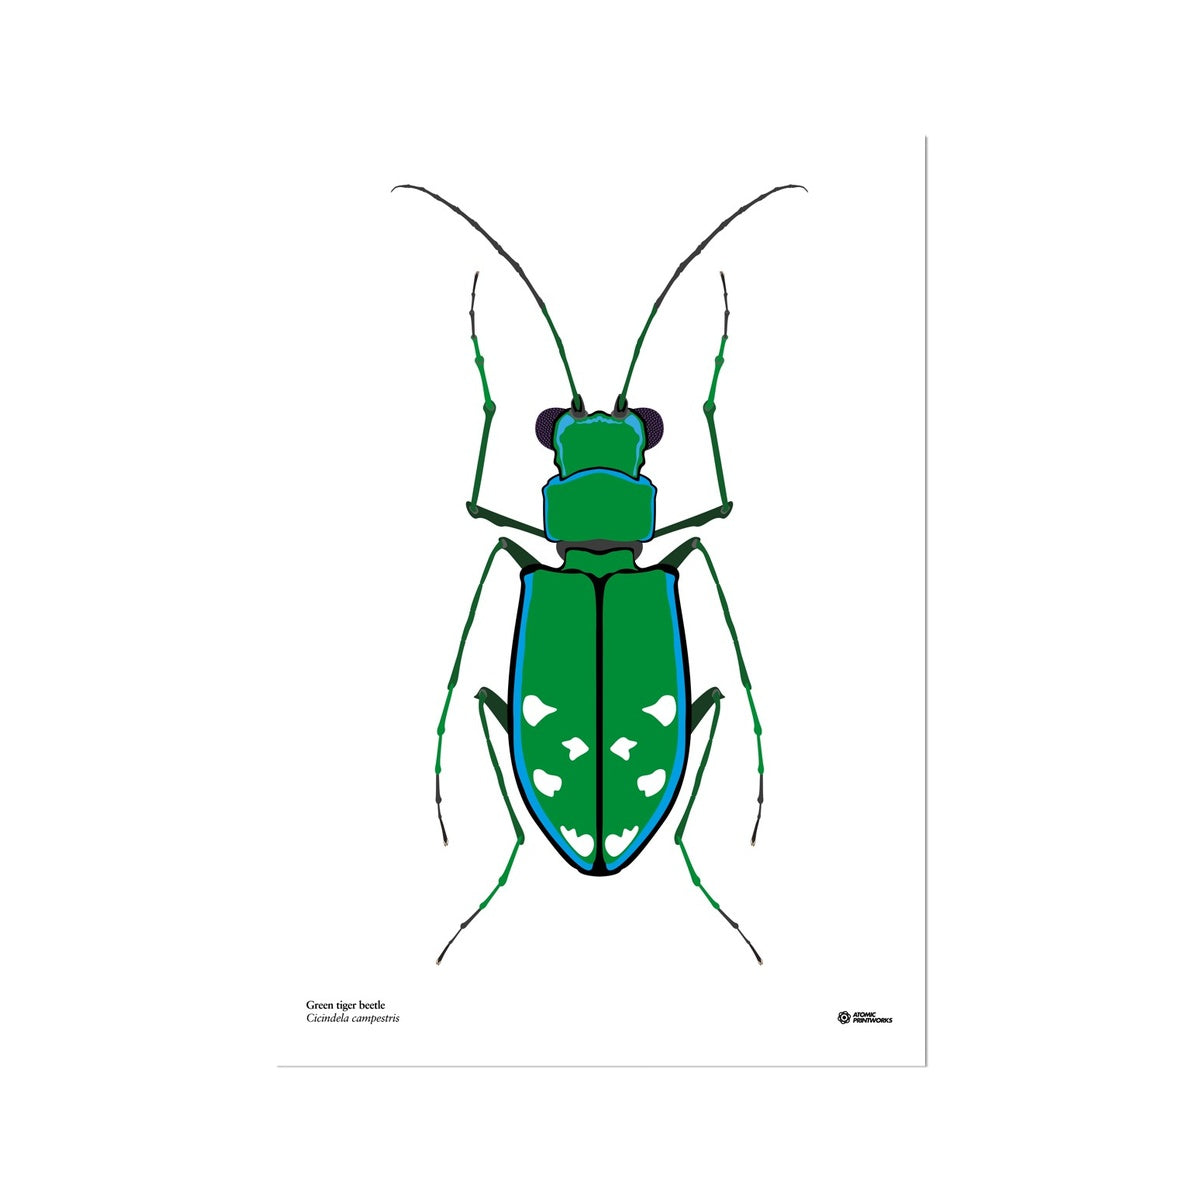 Green tiger beetle print